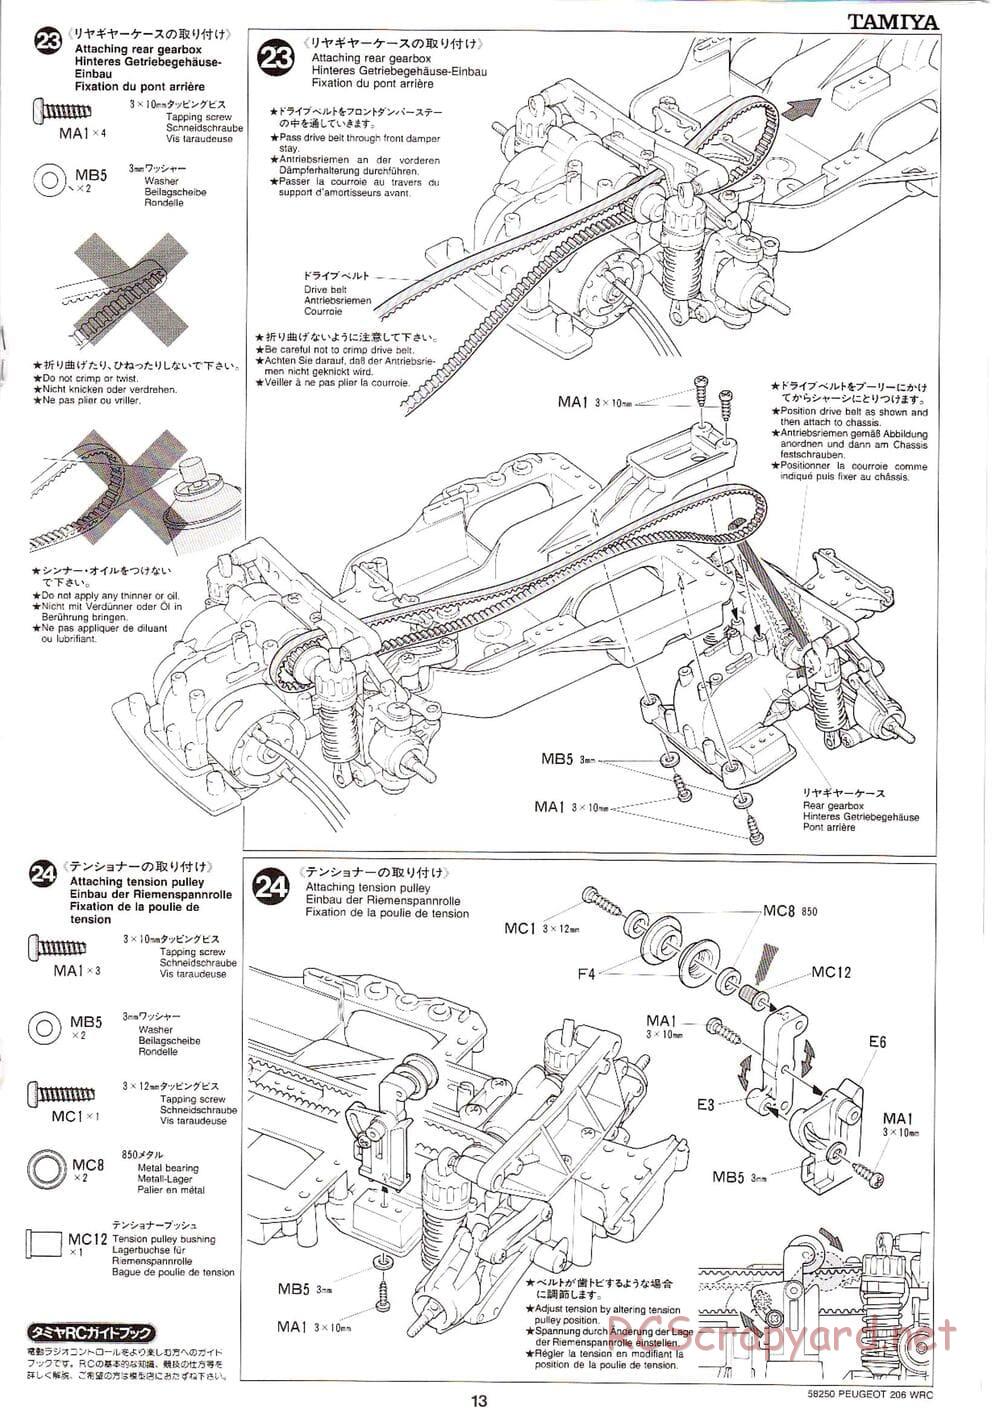 Tamiya - Peugeot 206 WRC - TA-03FS Chassis - Manual - Page 13